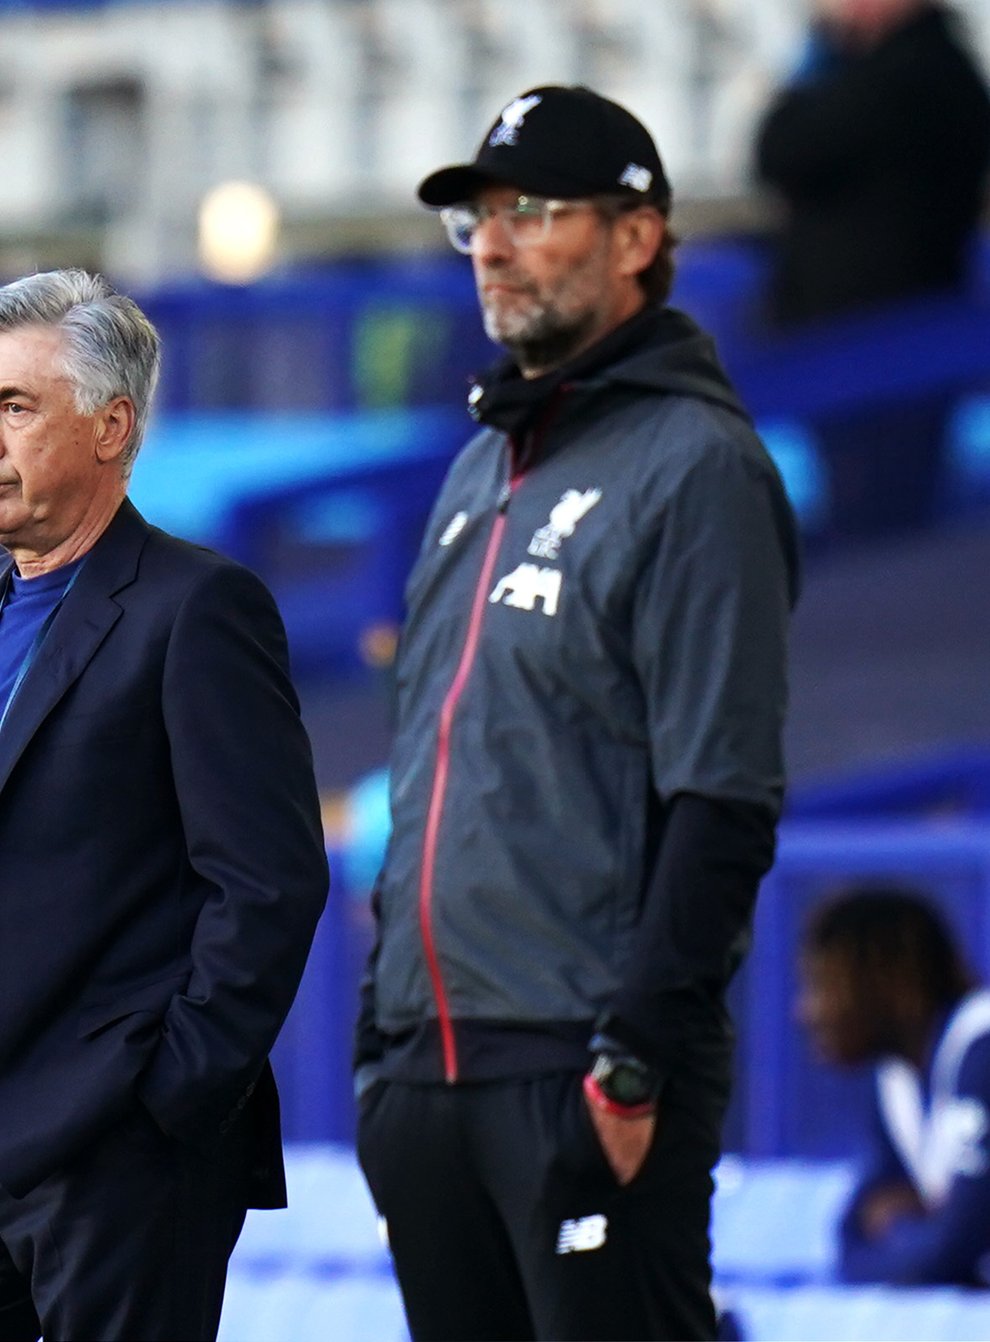 Carlo Ancelotti's Everton take on Jurgen Klopp's Liverpool after the international break